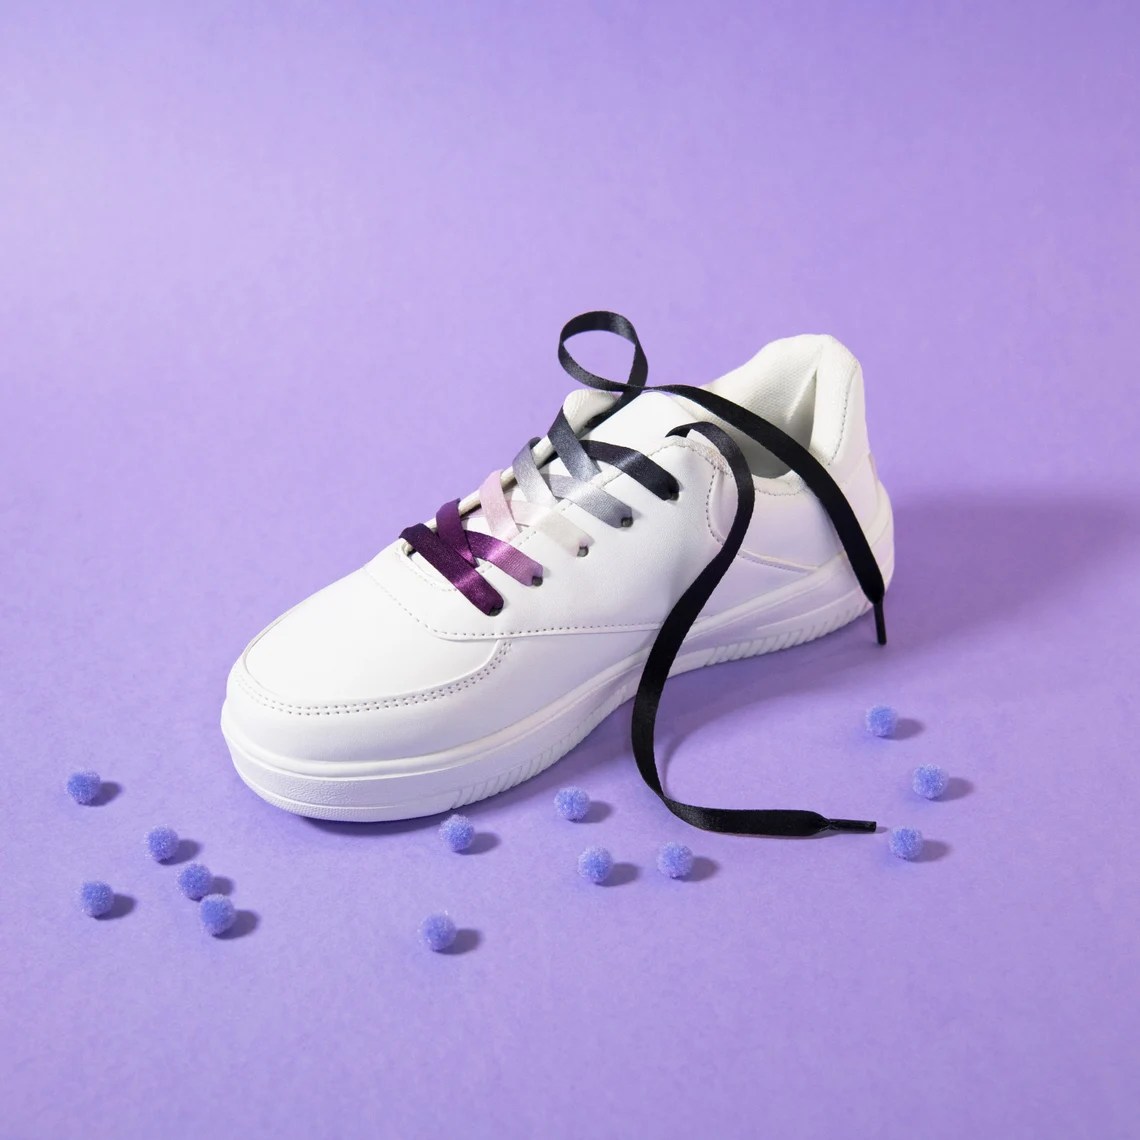 Asexual Pride shoelaces. 